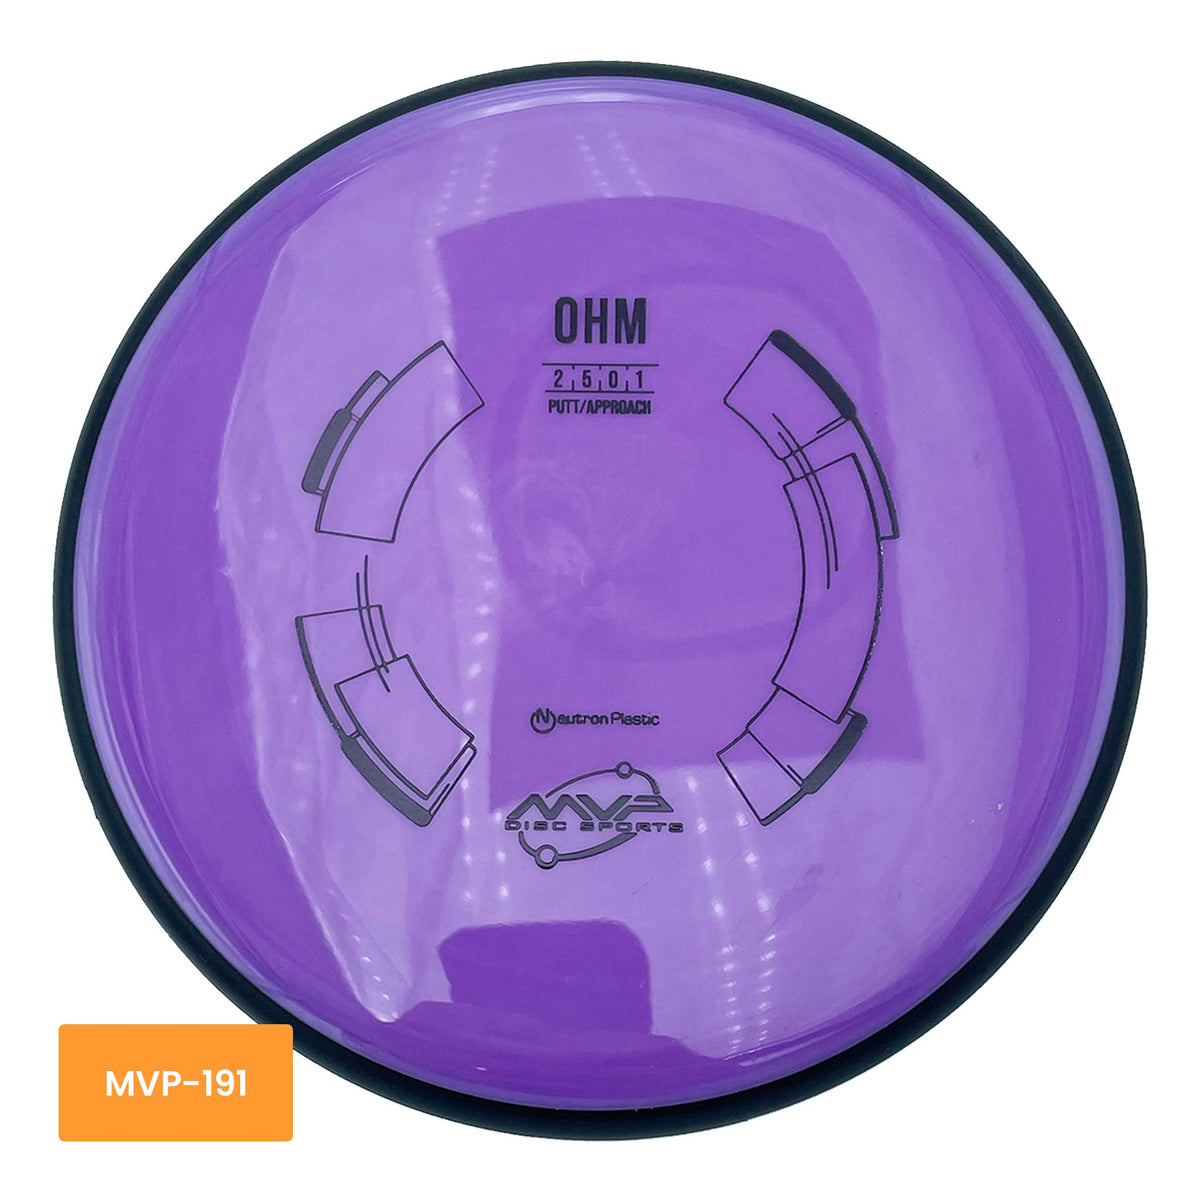 MVP Disc Sports Neutron Ohm putter and approach - Purple